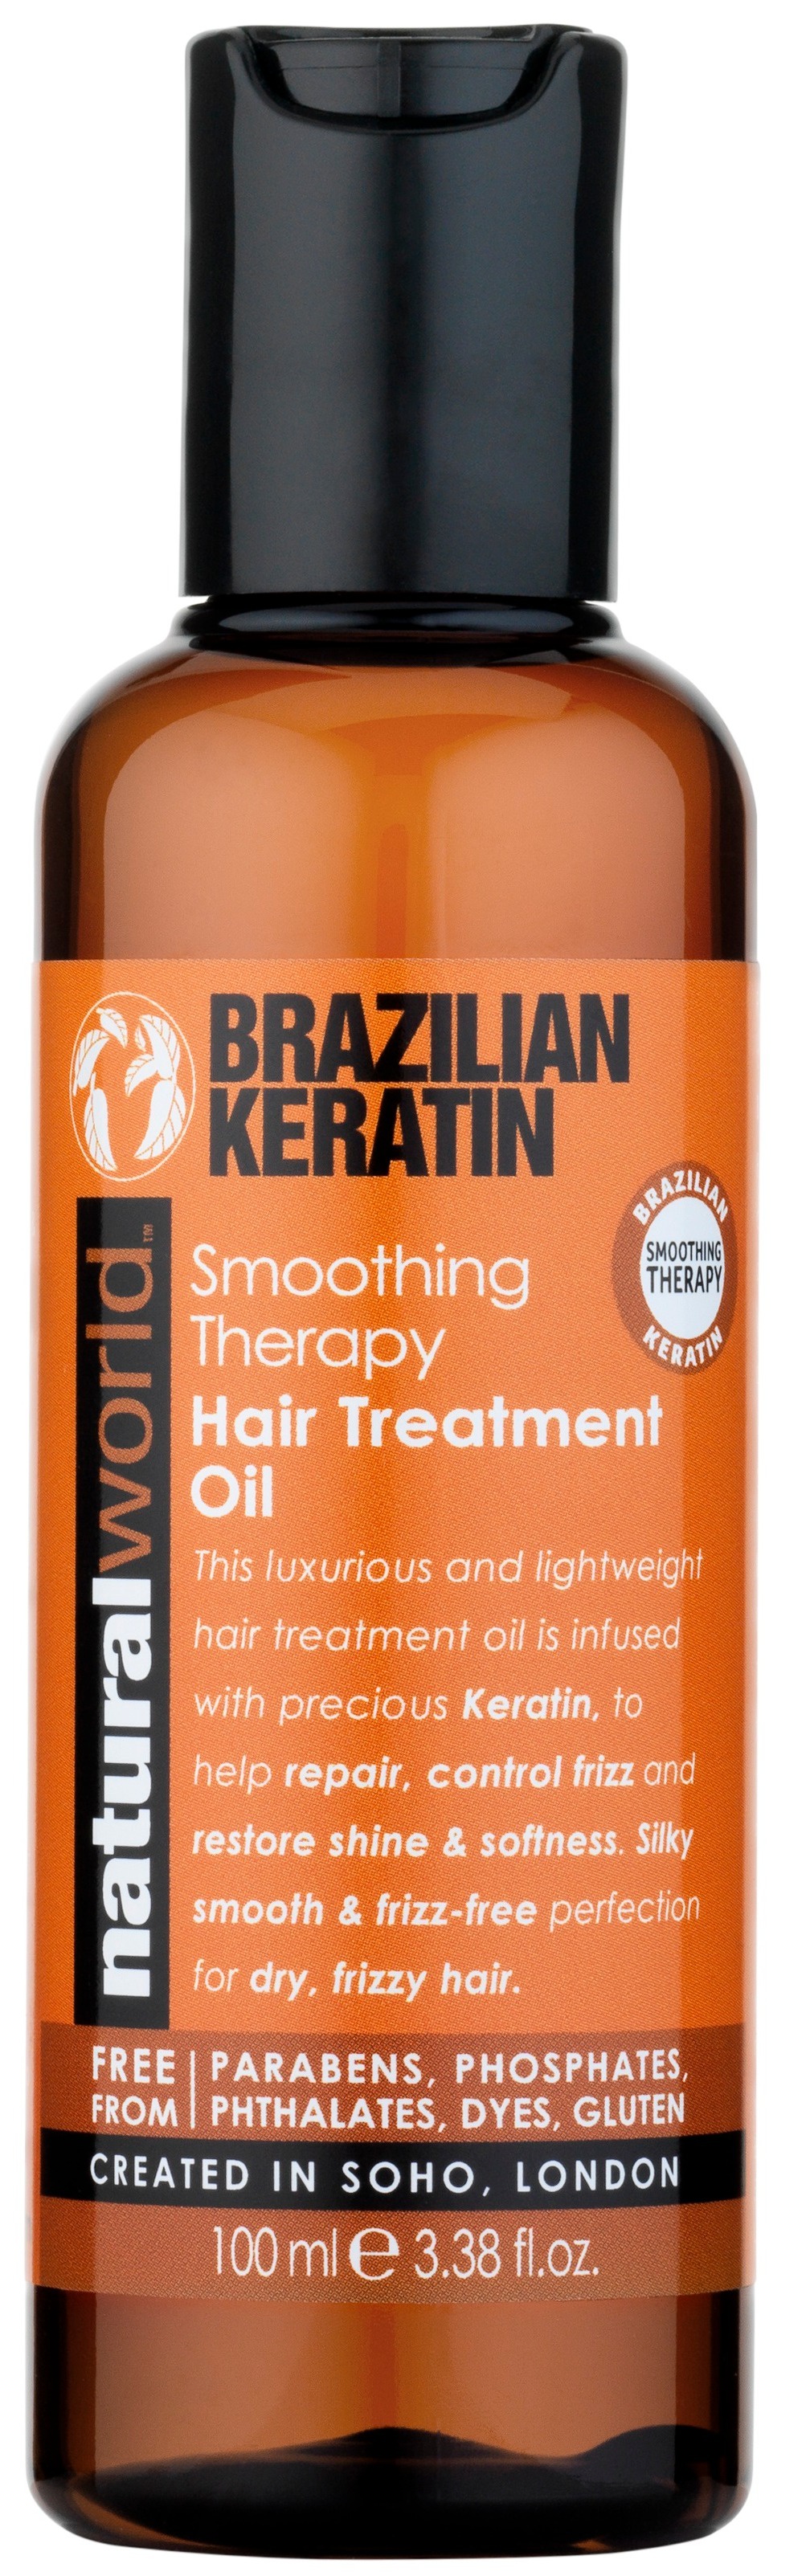 Natural world Brazilian Keratin Hair Treatment Oil